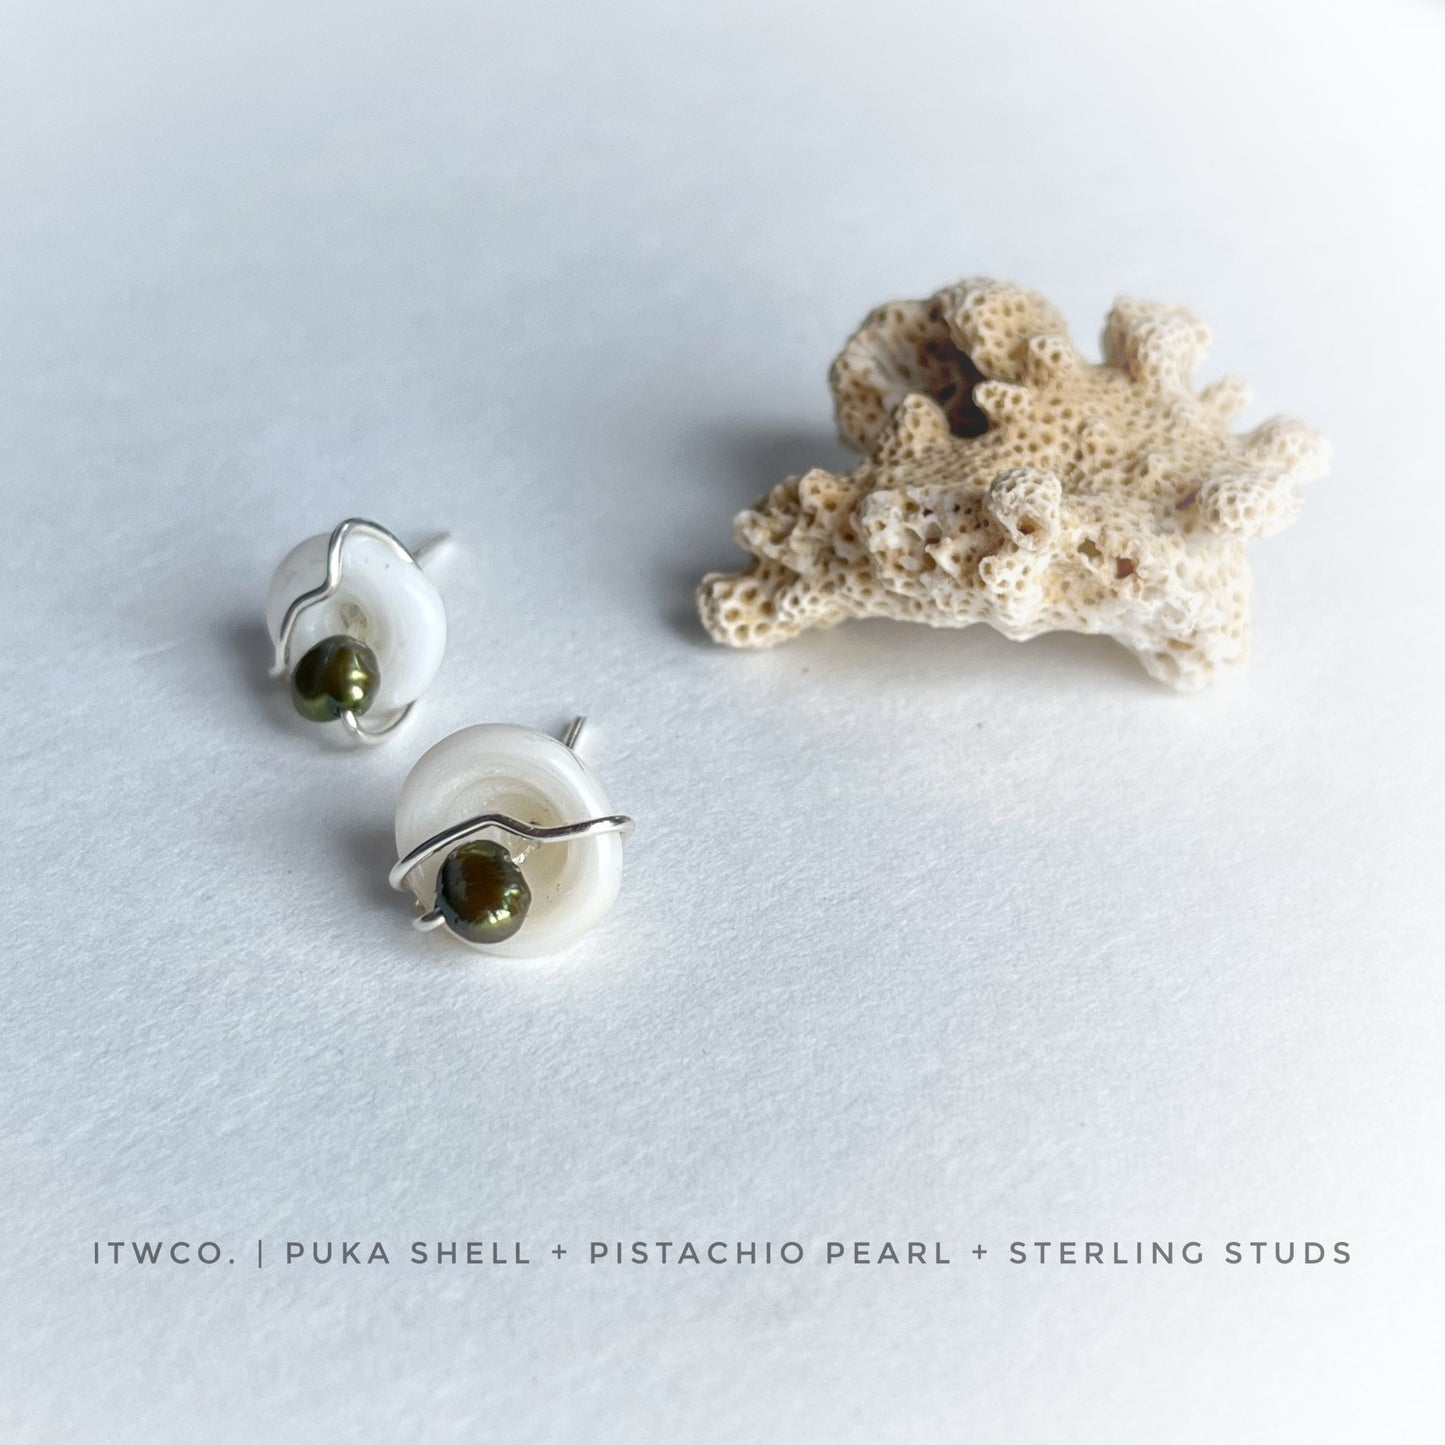 Puka shell + gemstone studs